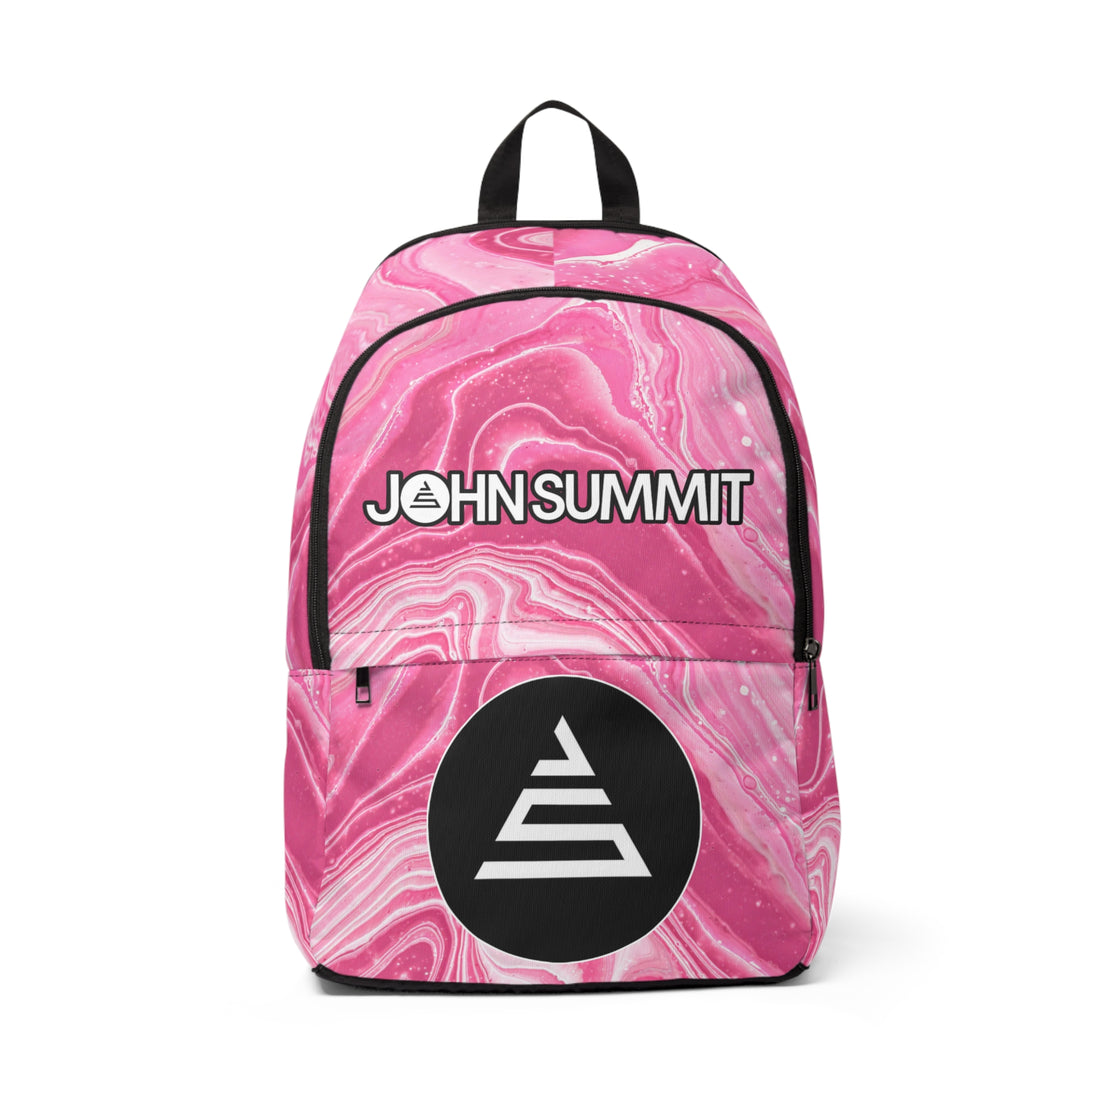 John Summit Backpack Edm Rave Bag